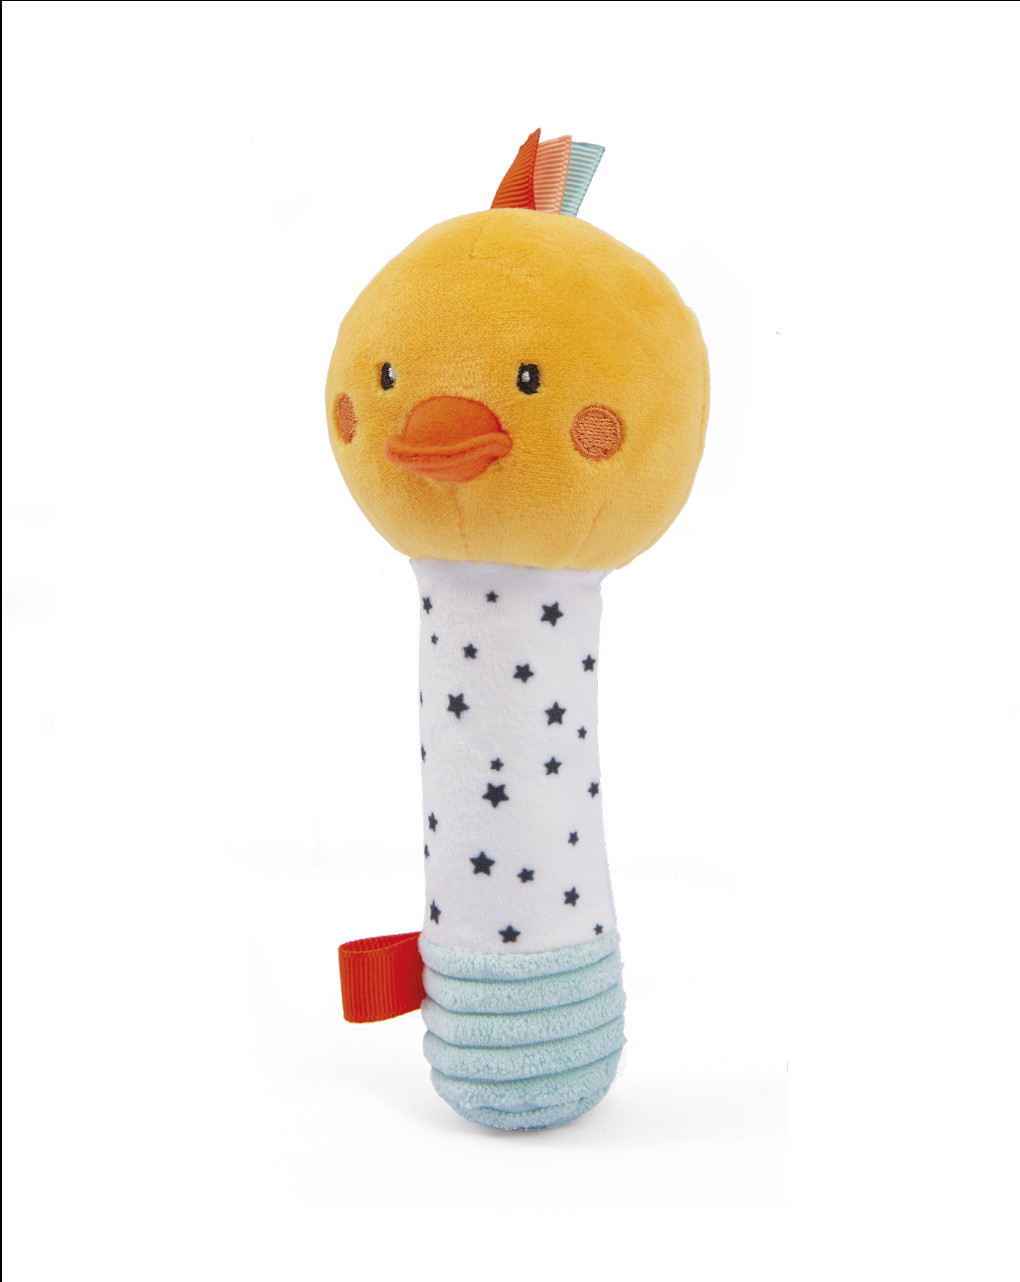 Sonaglino squeaker paperella ducky - soft toys - Baby Smile